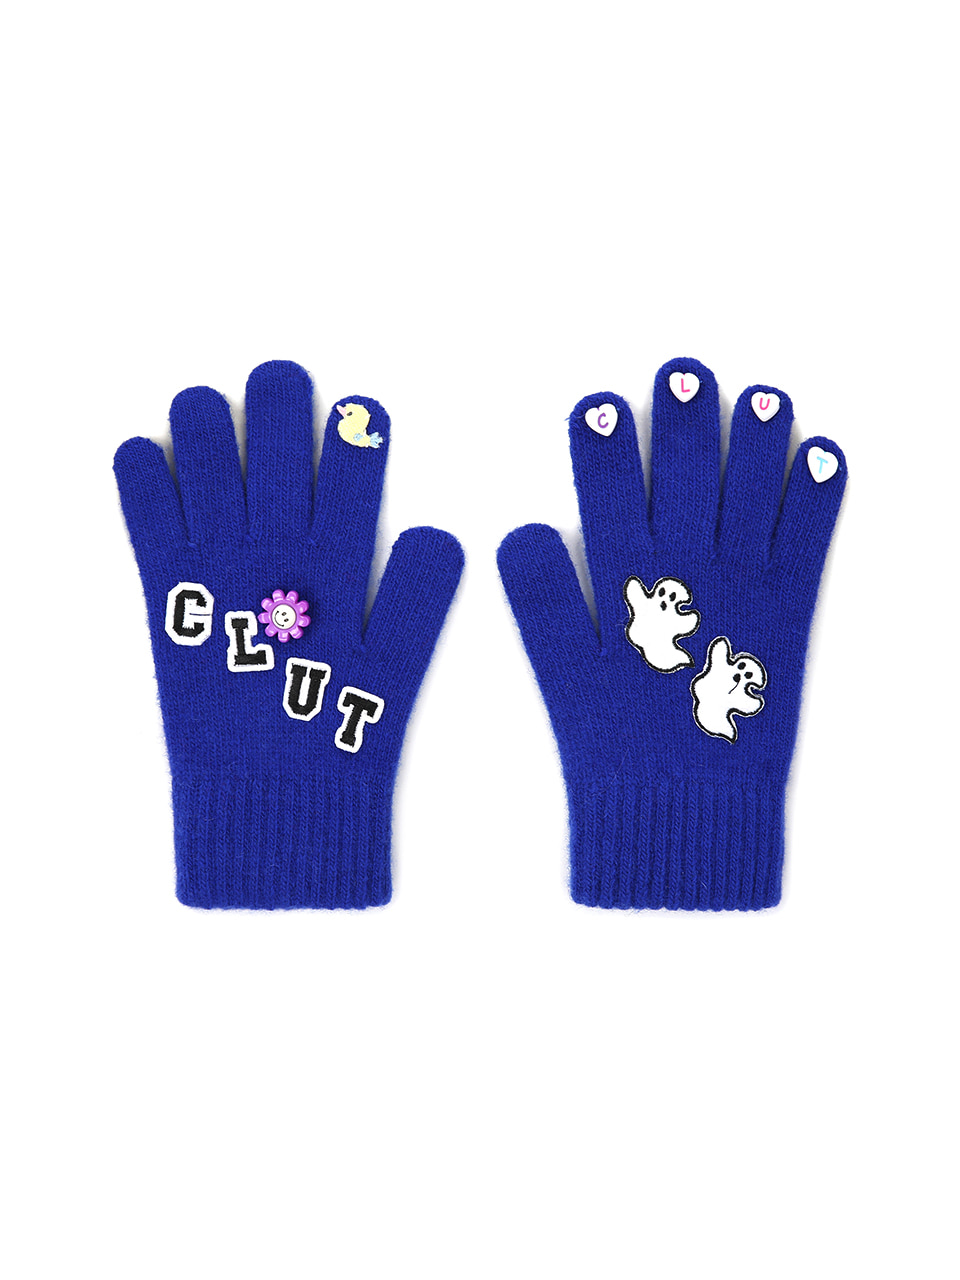 0 5 ghost wool knit gloves - BLUE